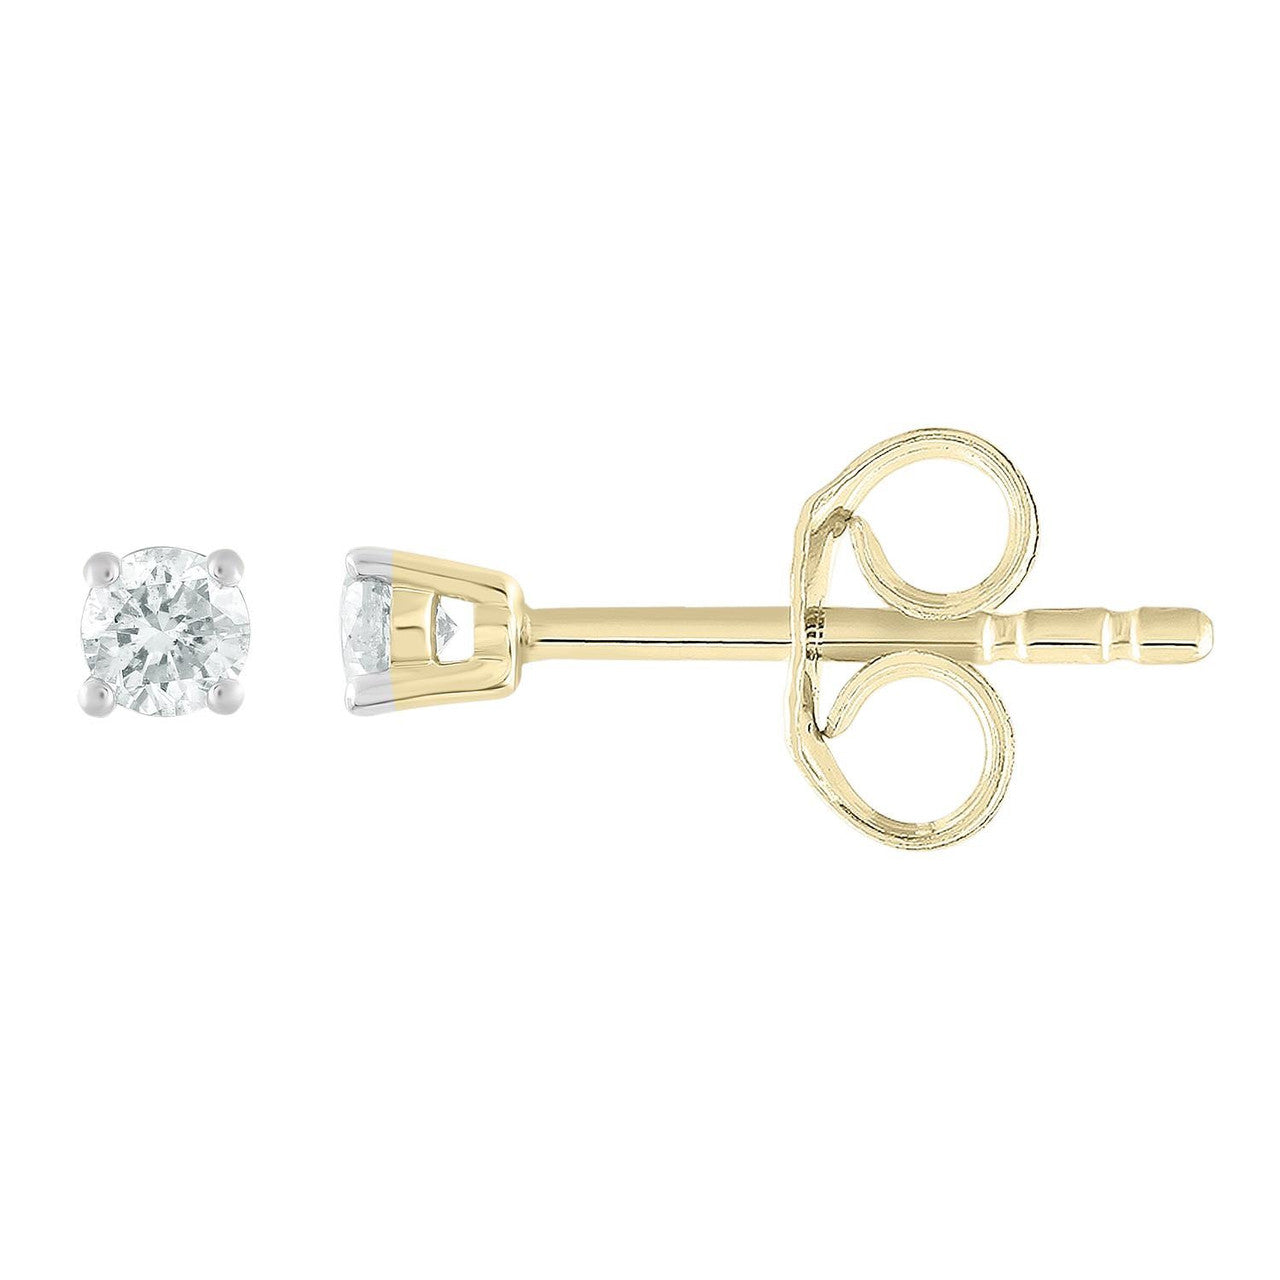 Ice Jewellery Stud Earrings with 0.10ct Diamonds in 9K Yellow Gold | Ice Jewellery Australia